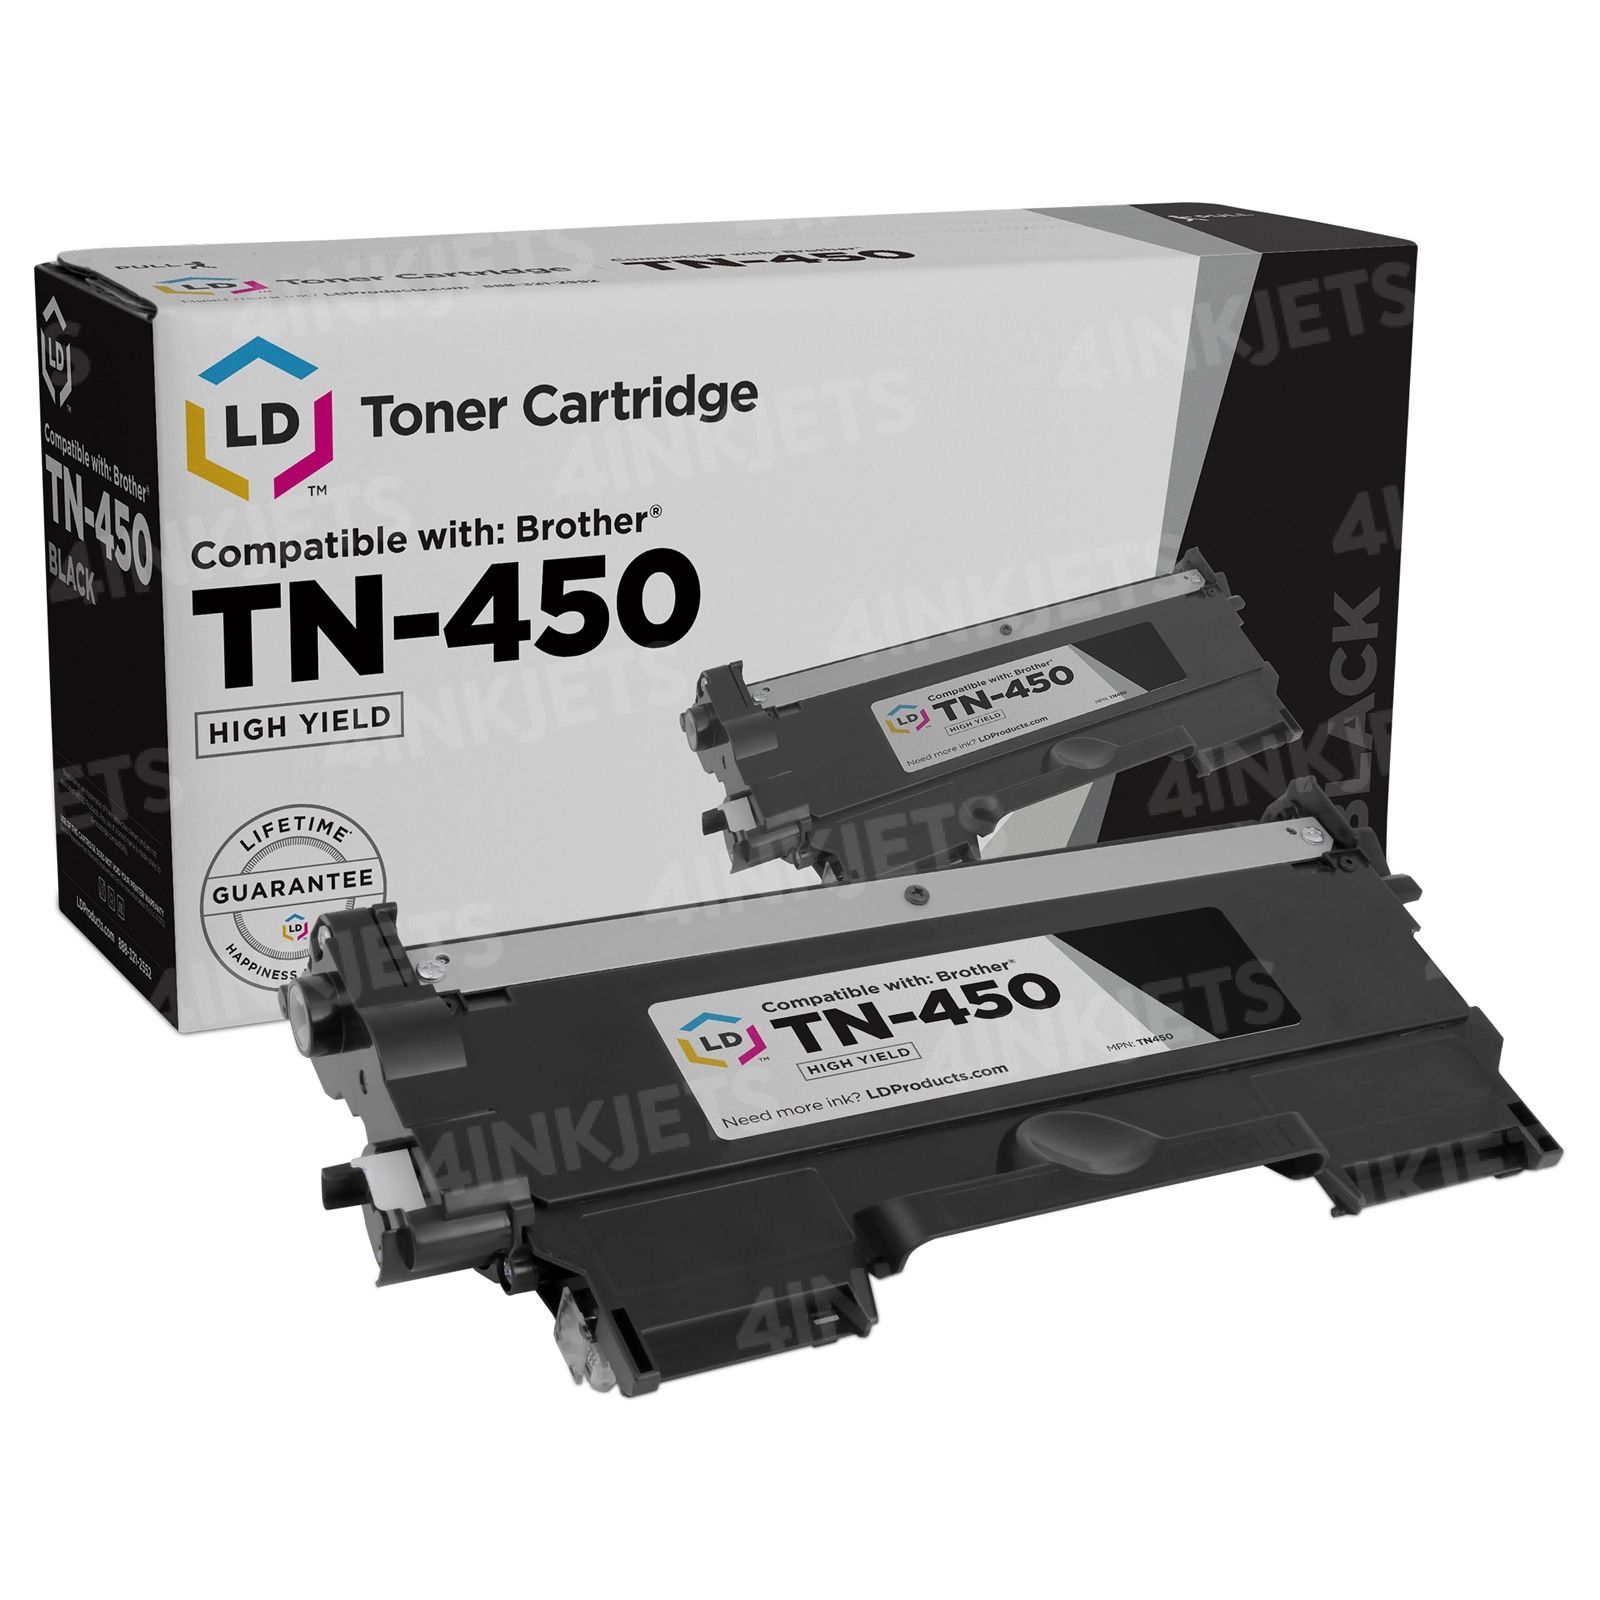 Brother TN450 Toner - Lower Prices on Best Seller Cartridges - 4inkjets